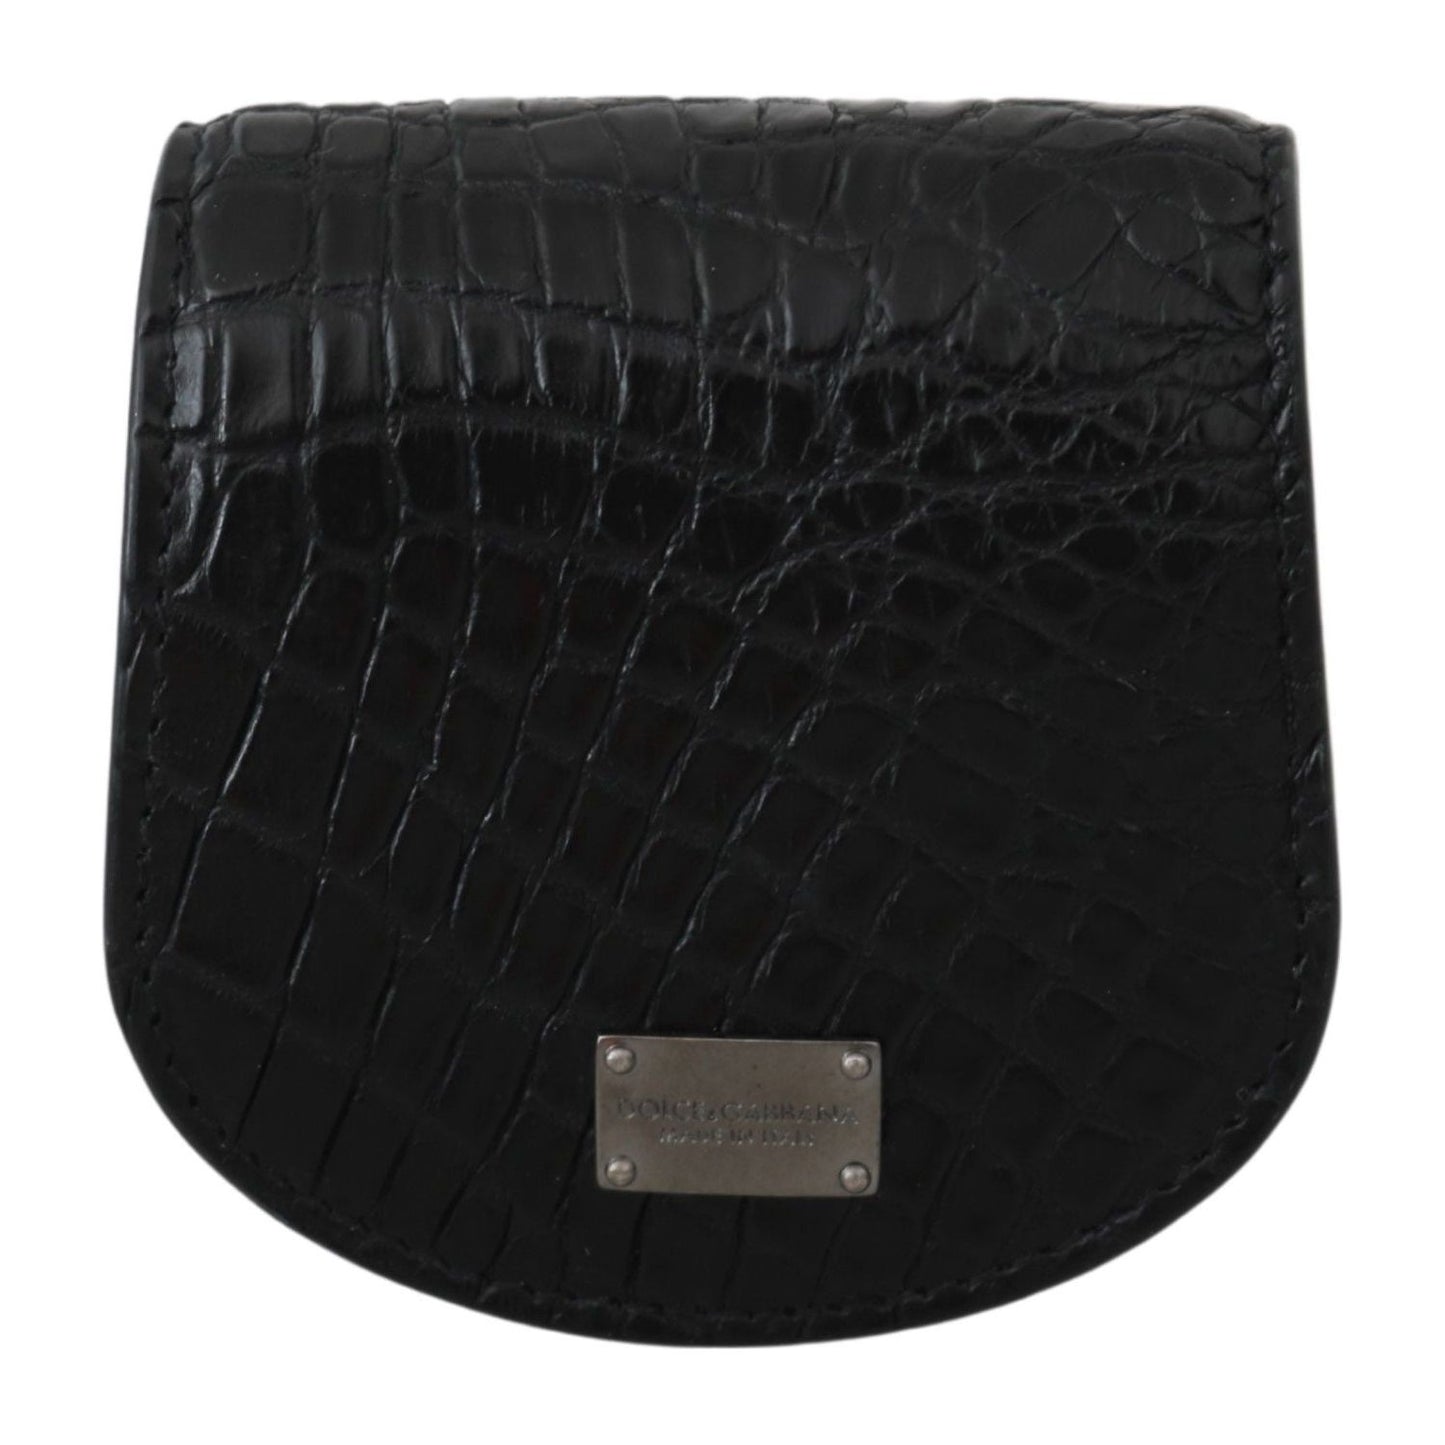 Condom Case Sleek Black Leather Coin Case Wallet Dolce & Gabbana